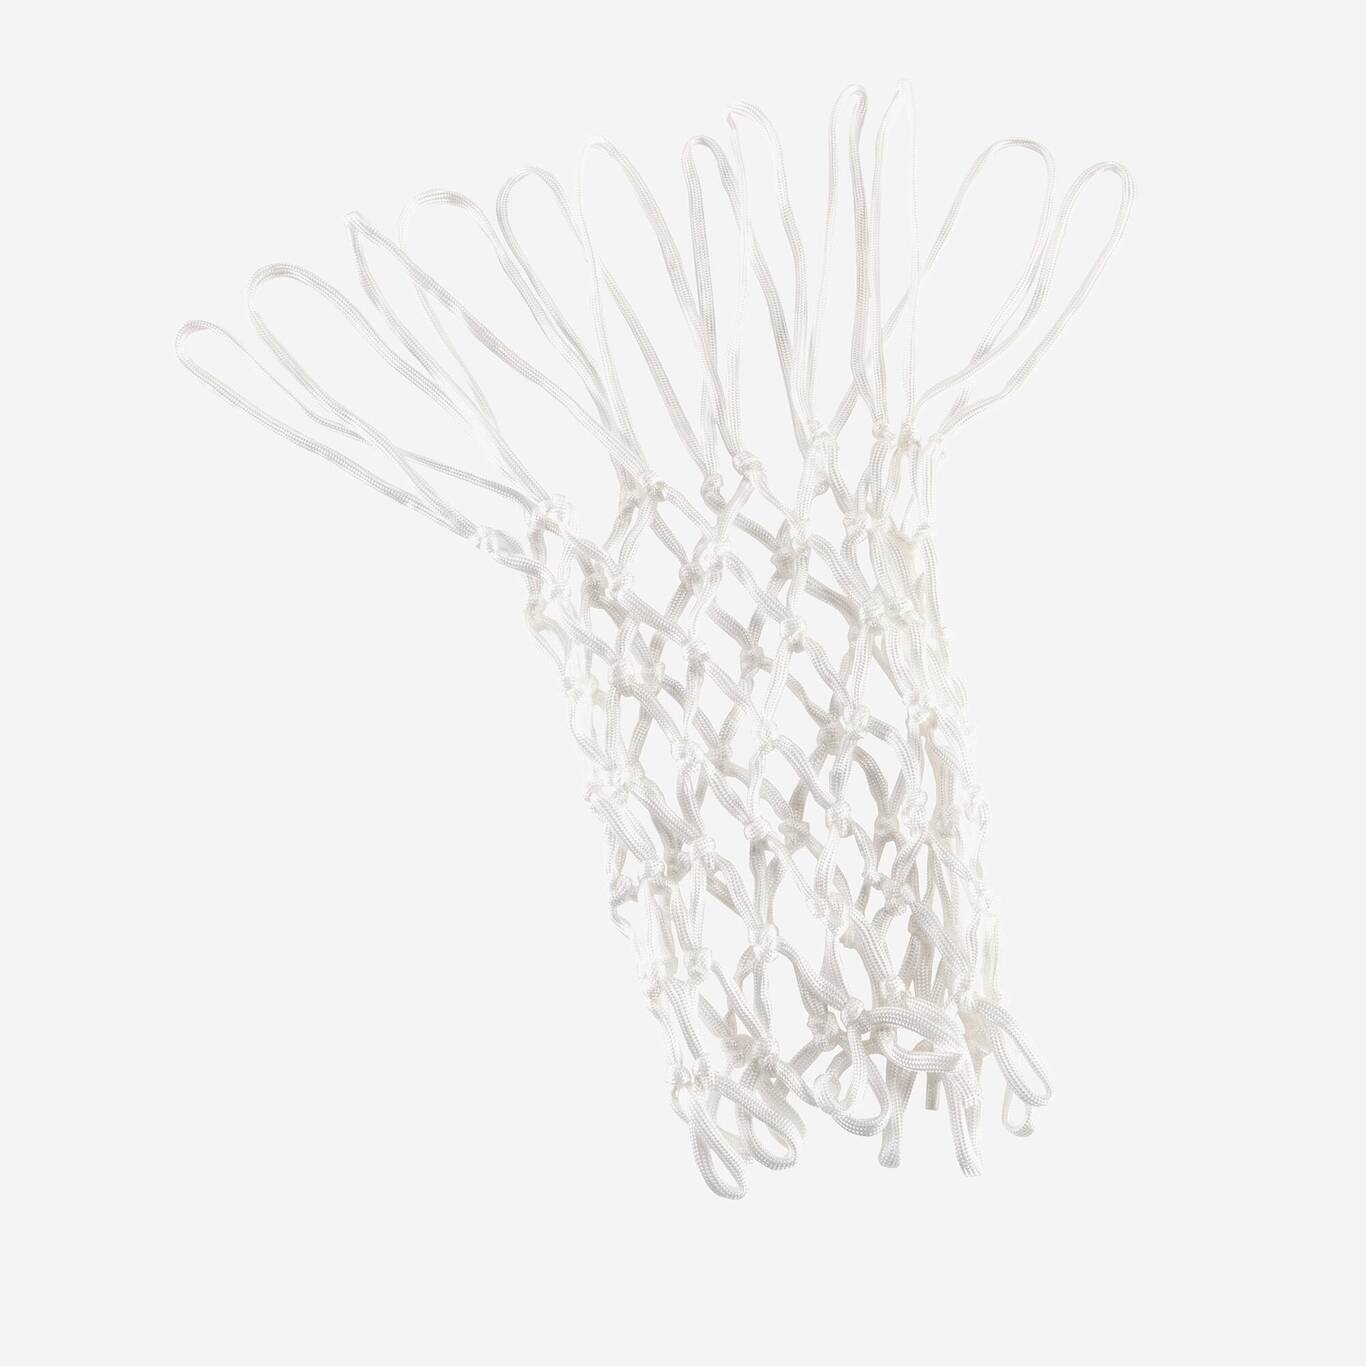 6mm Hoop or Backboard Basketball Net - White. Resistant to bad weather.